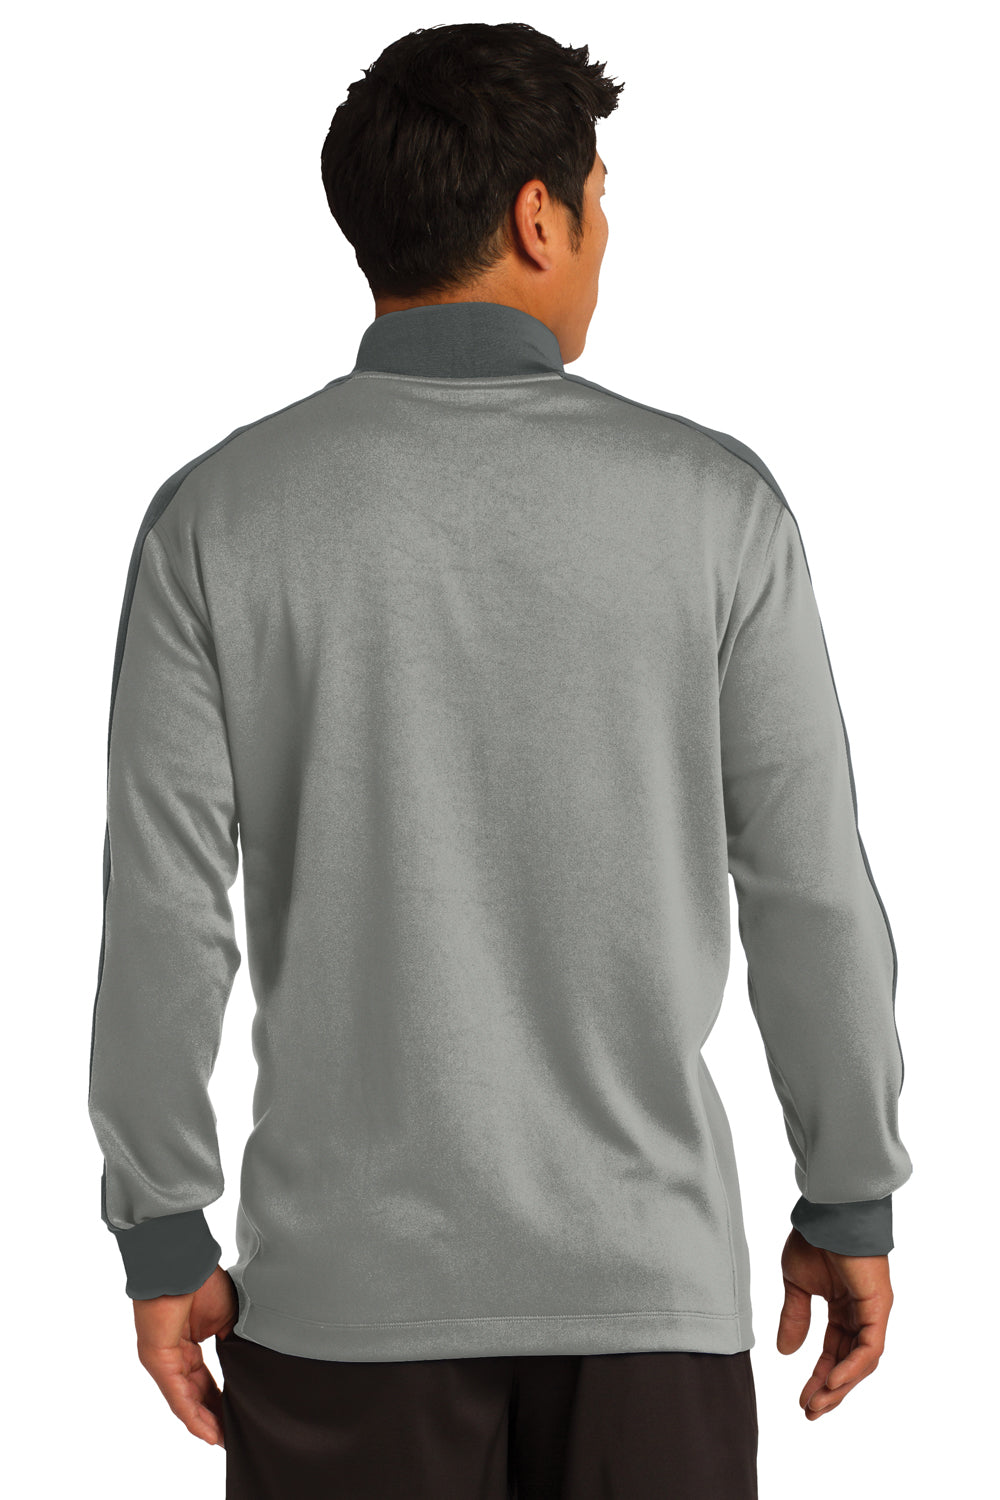 Nike 578673 Mens Dri-Fit Moisture Wicking 1/4 Zip Sweatshirt Heather Grey/Dark Grey Model Back